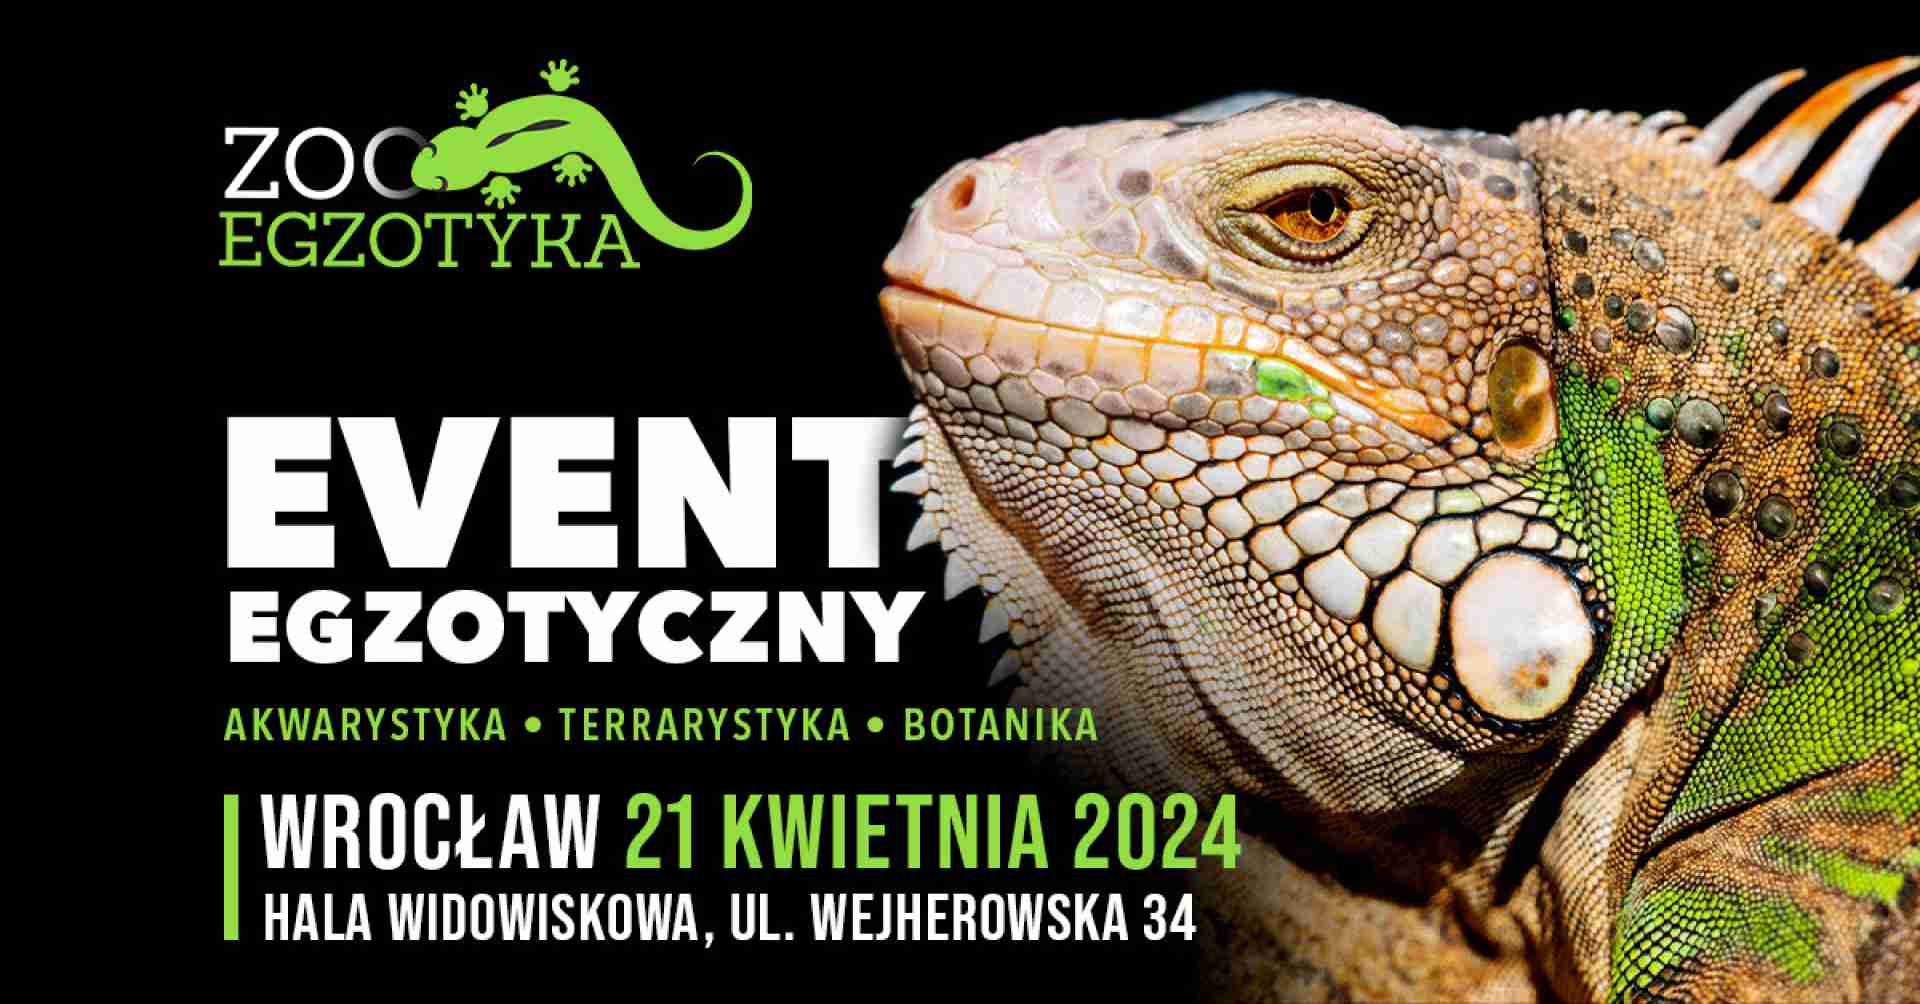 ZooEgzotyka Wrocław 21.04.2024 AD [10:00 - 16:00]